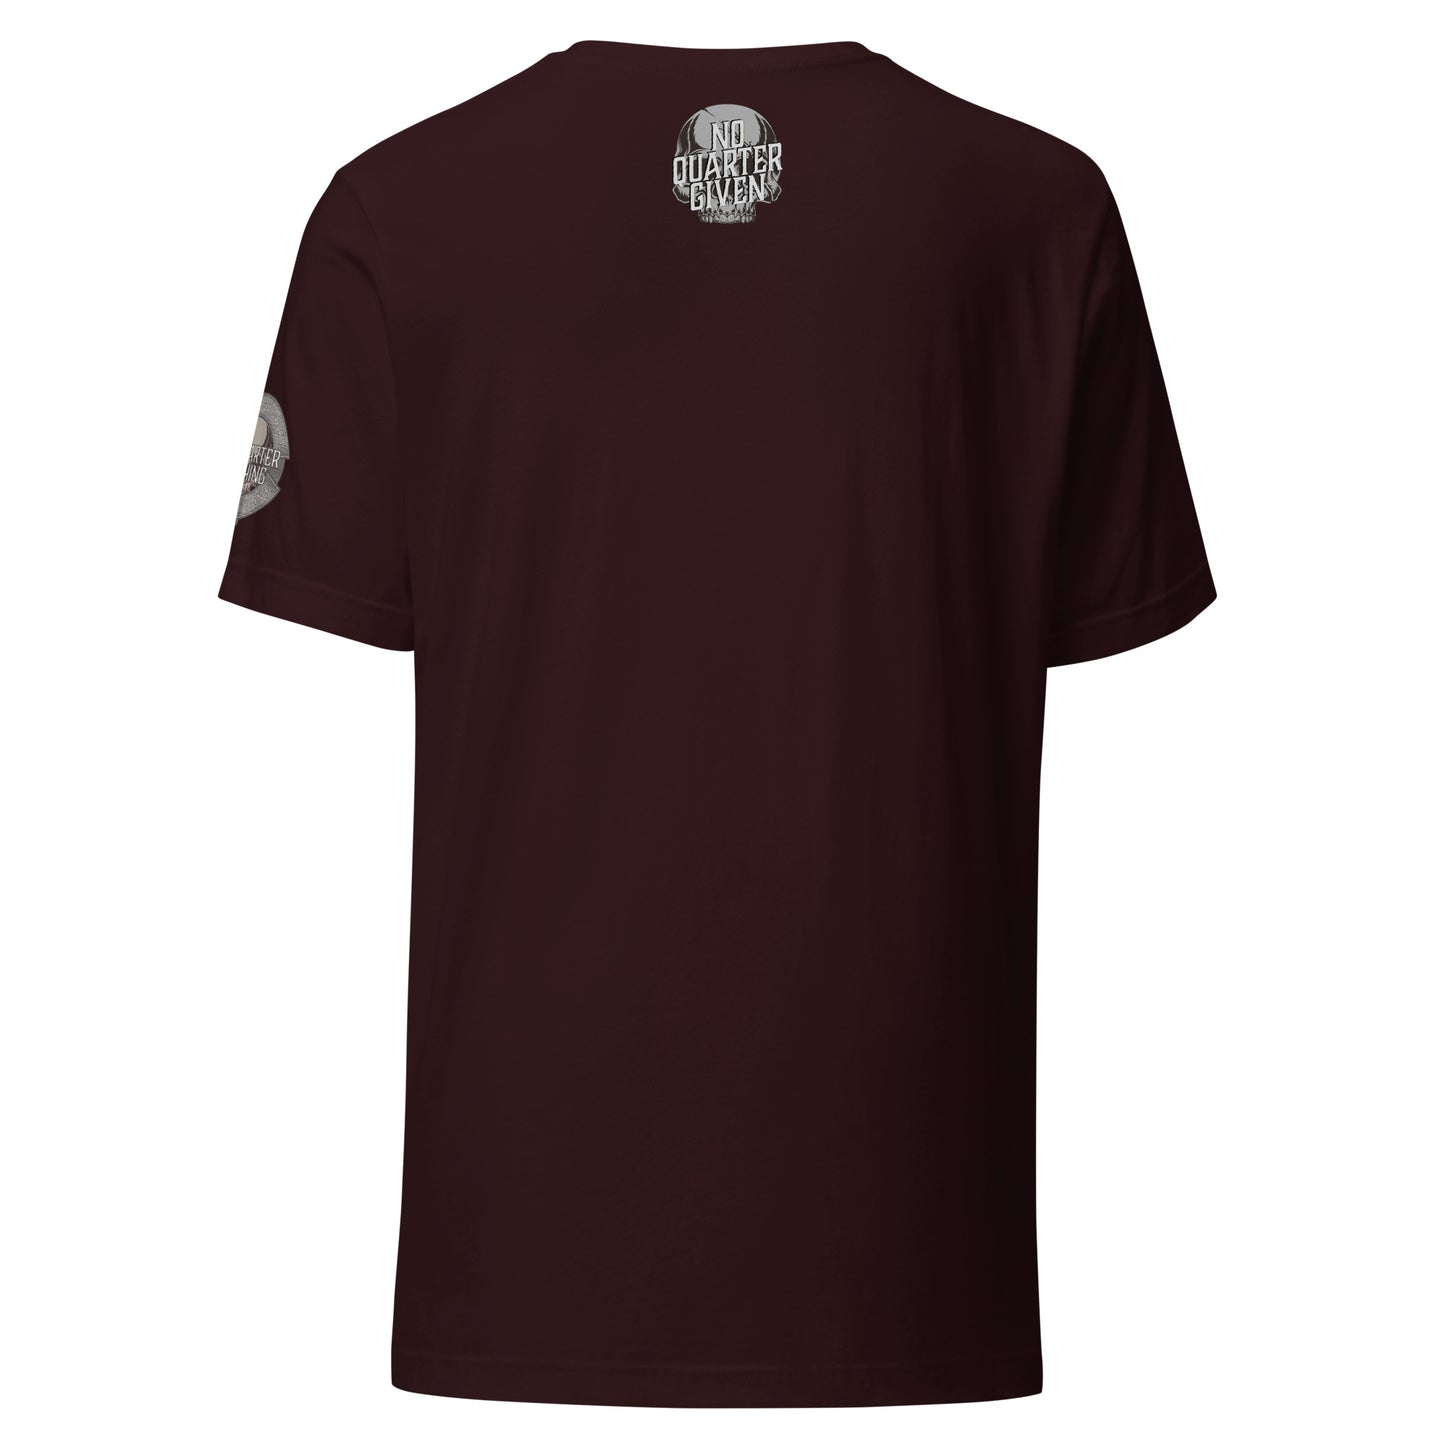 Wristlock Religion Shirt